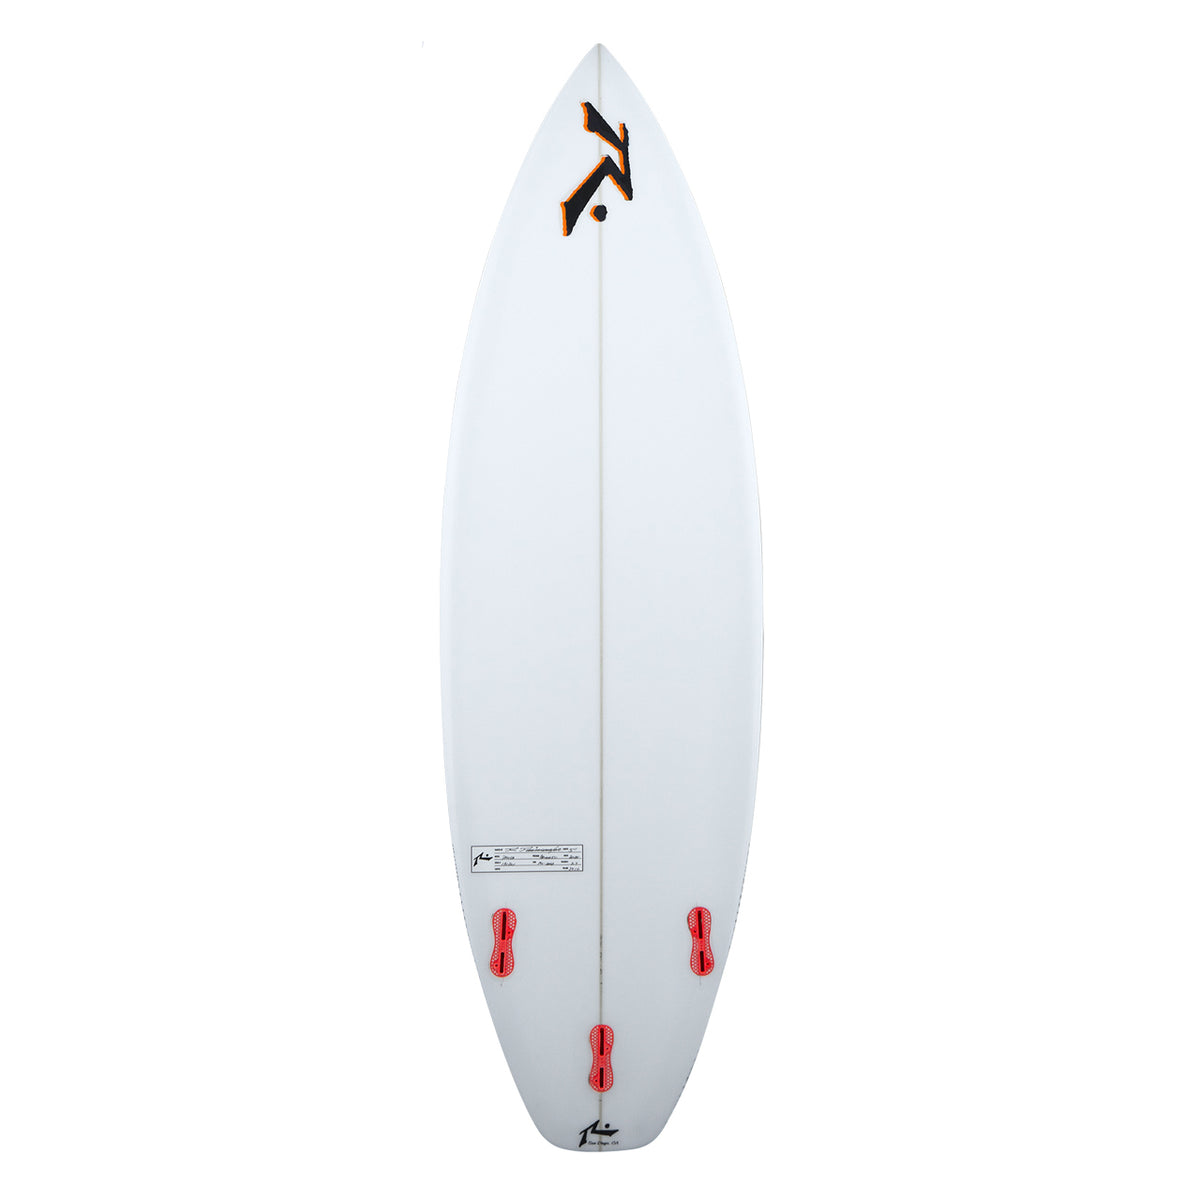 Panda - High Performance Shortboard - Rusty Surfboards - Bottom View